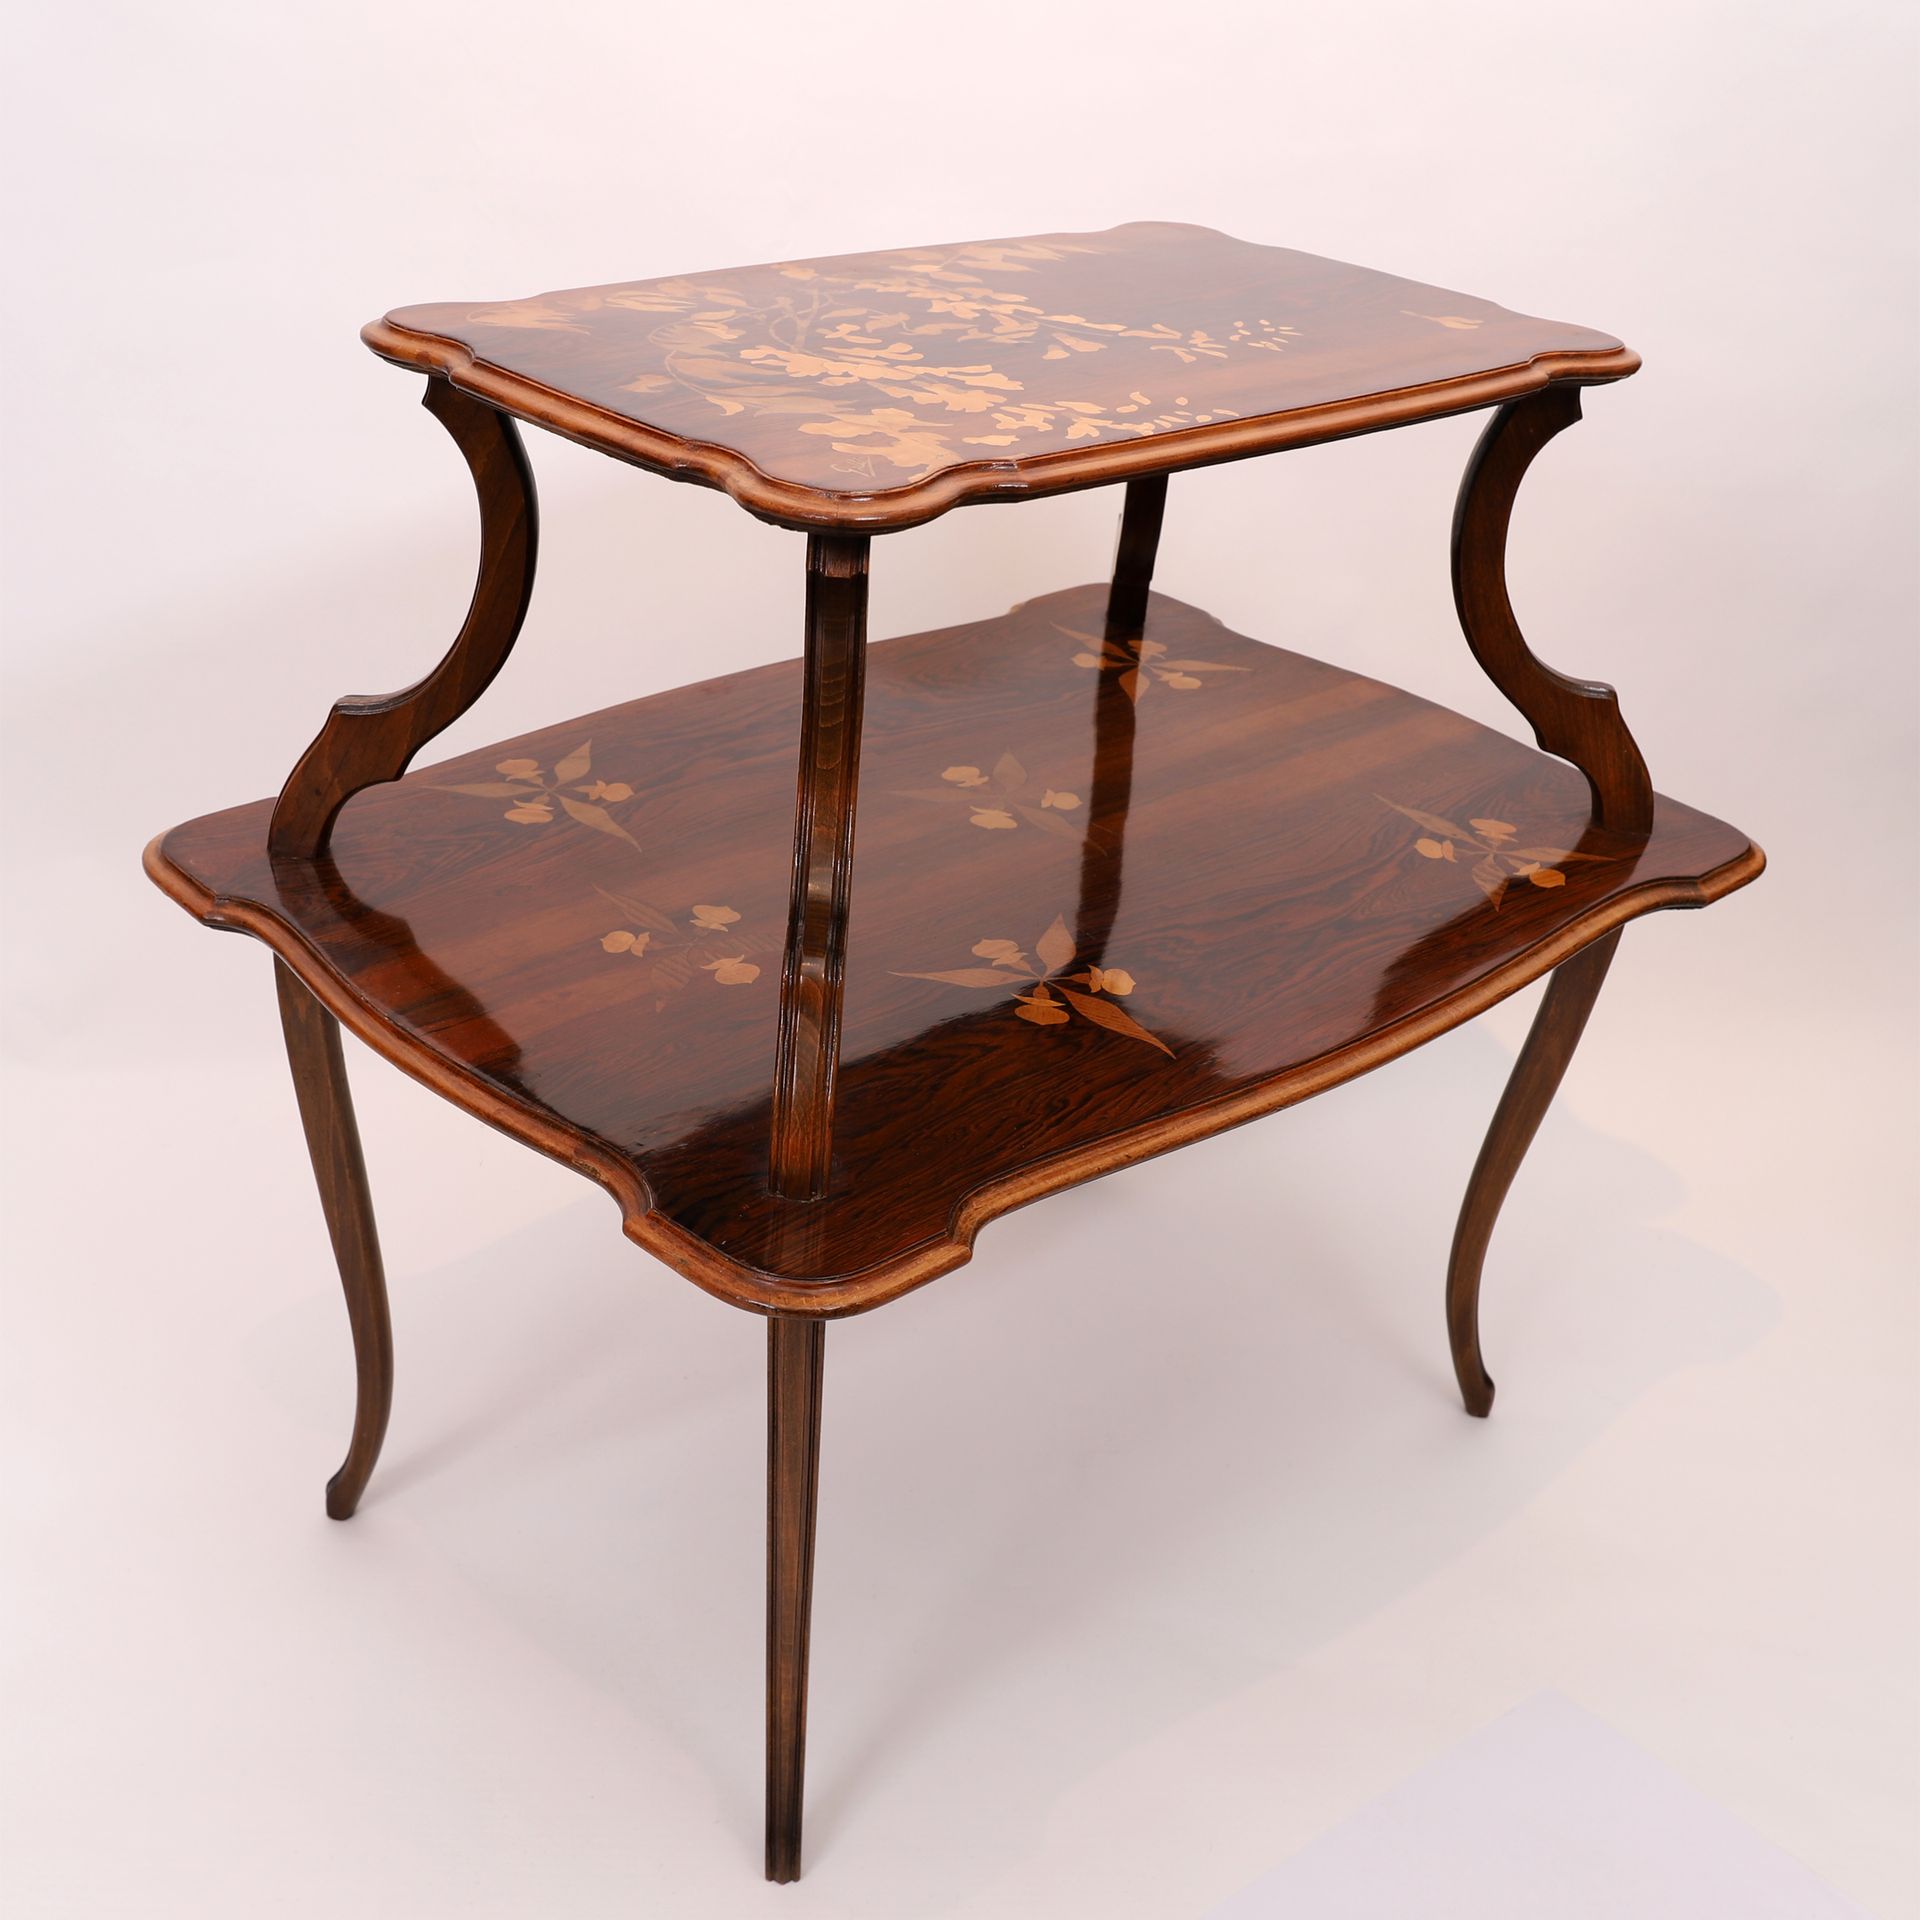 Null 埃米尔-加莱（1846-1904 年）制作的非常精美的双层茶几
茶几立于四条弧形模制桌腿上，桌面边缘模制。
用各种木材镶嵌装饰，顶部饰有紫藤花，隔板上&hellip;